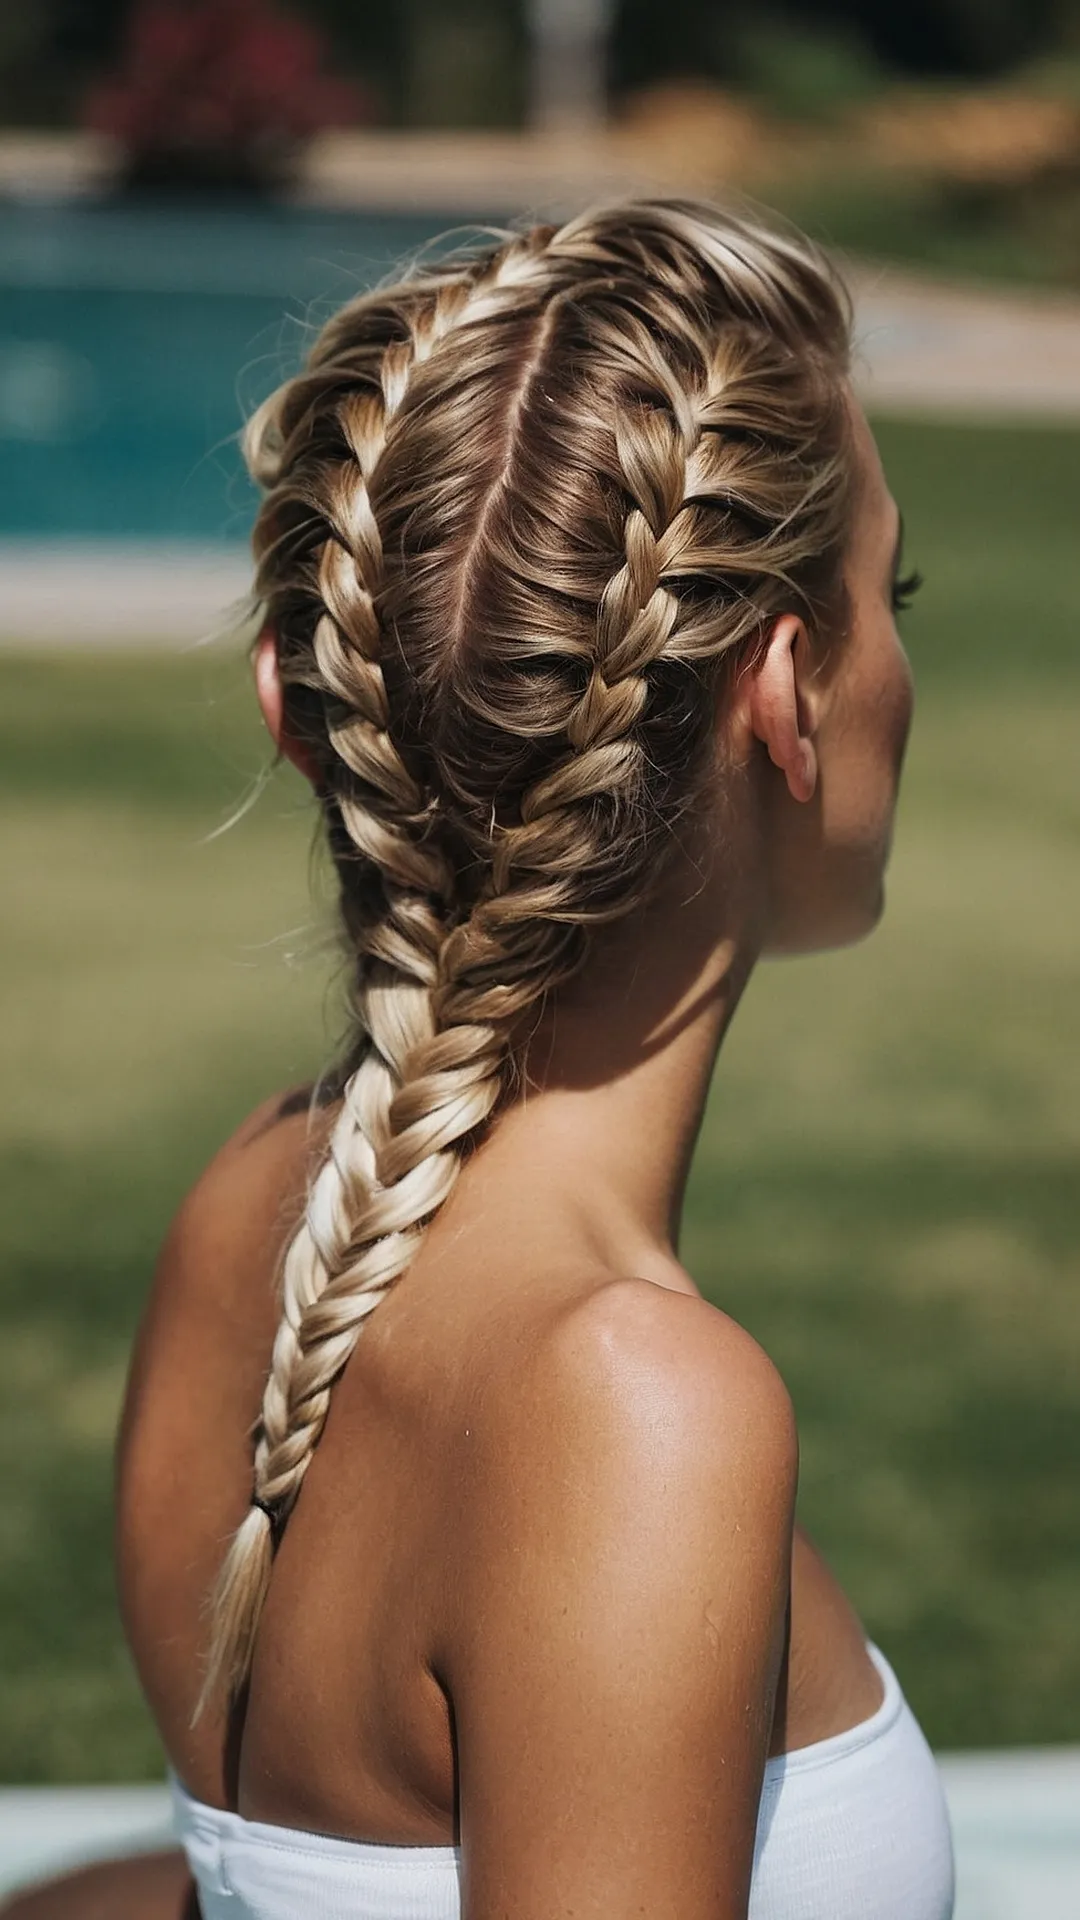 Get Summer-Ready: Pool Hair Inspiration